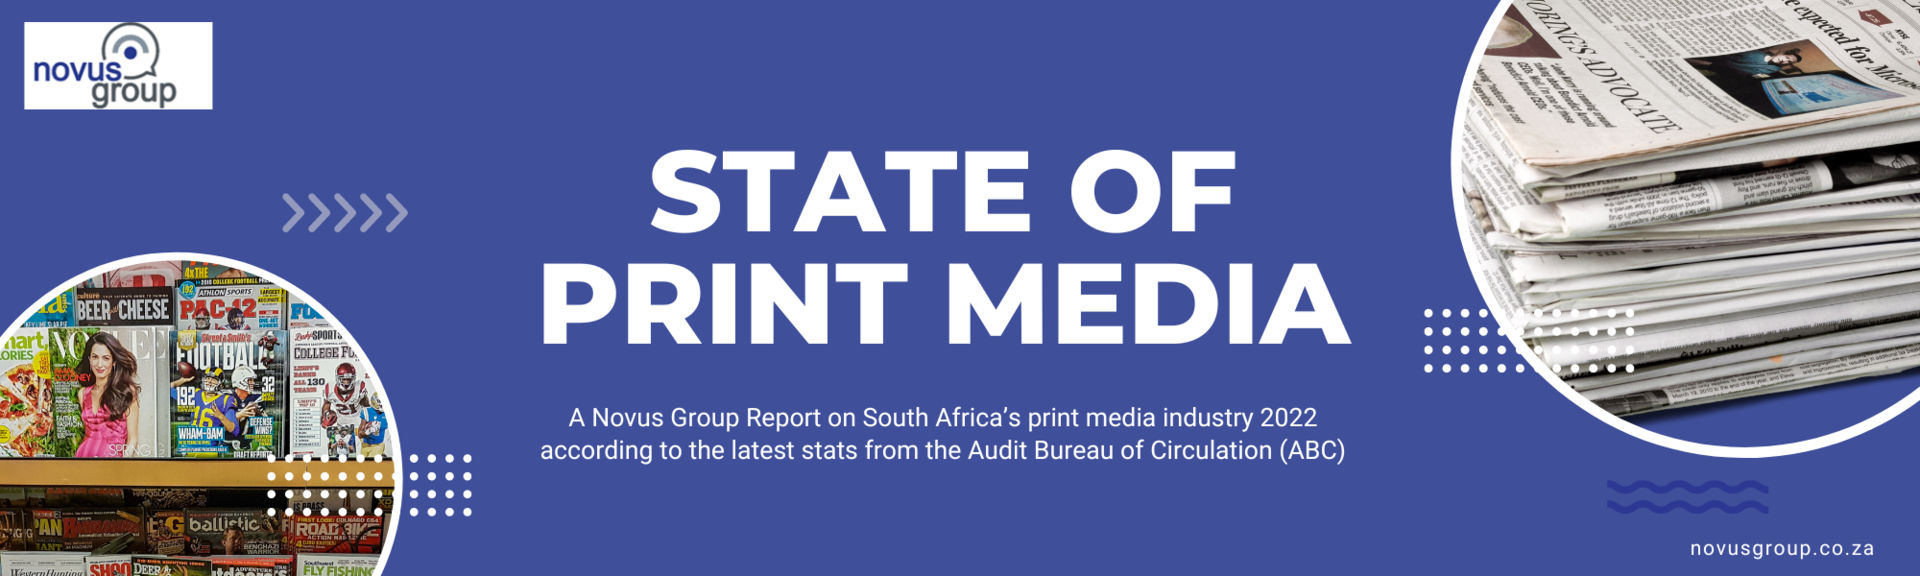 Print media continues decline as titles online